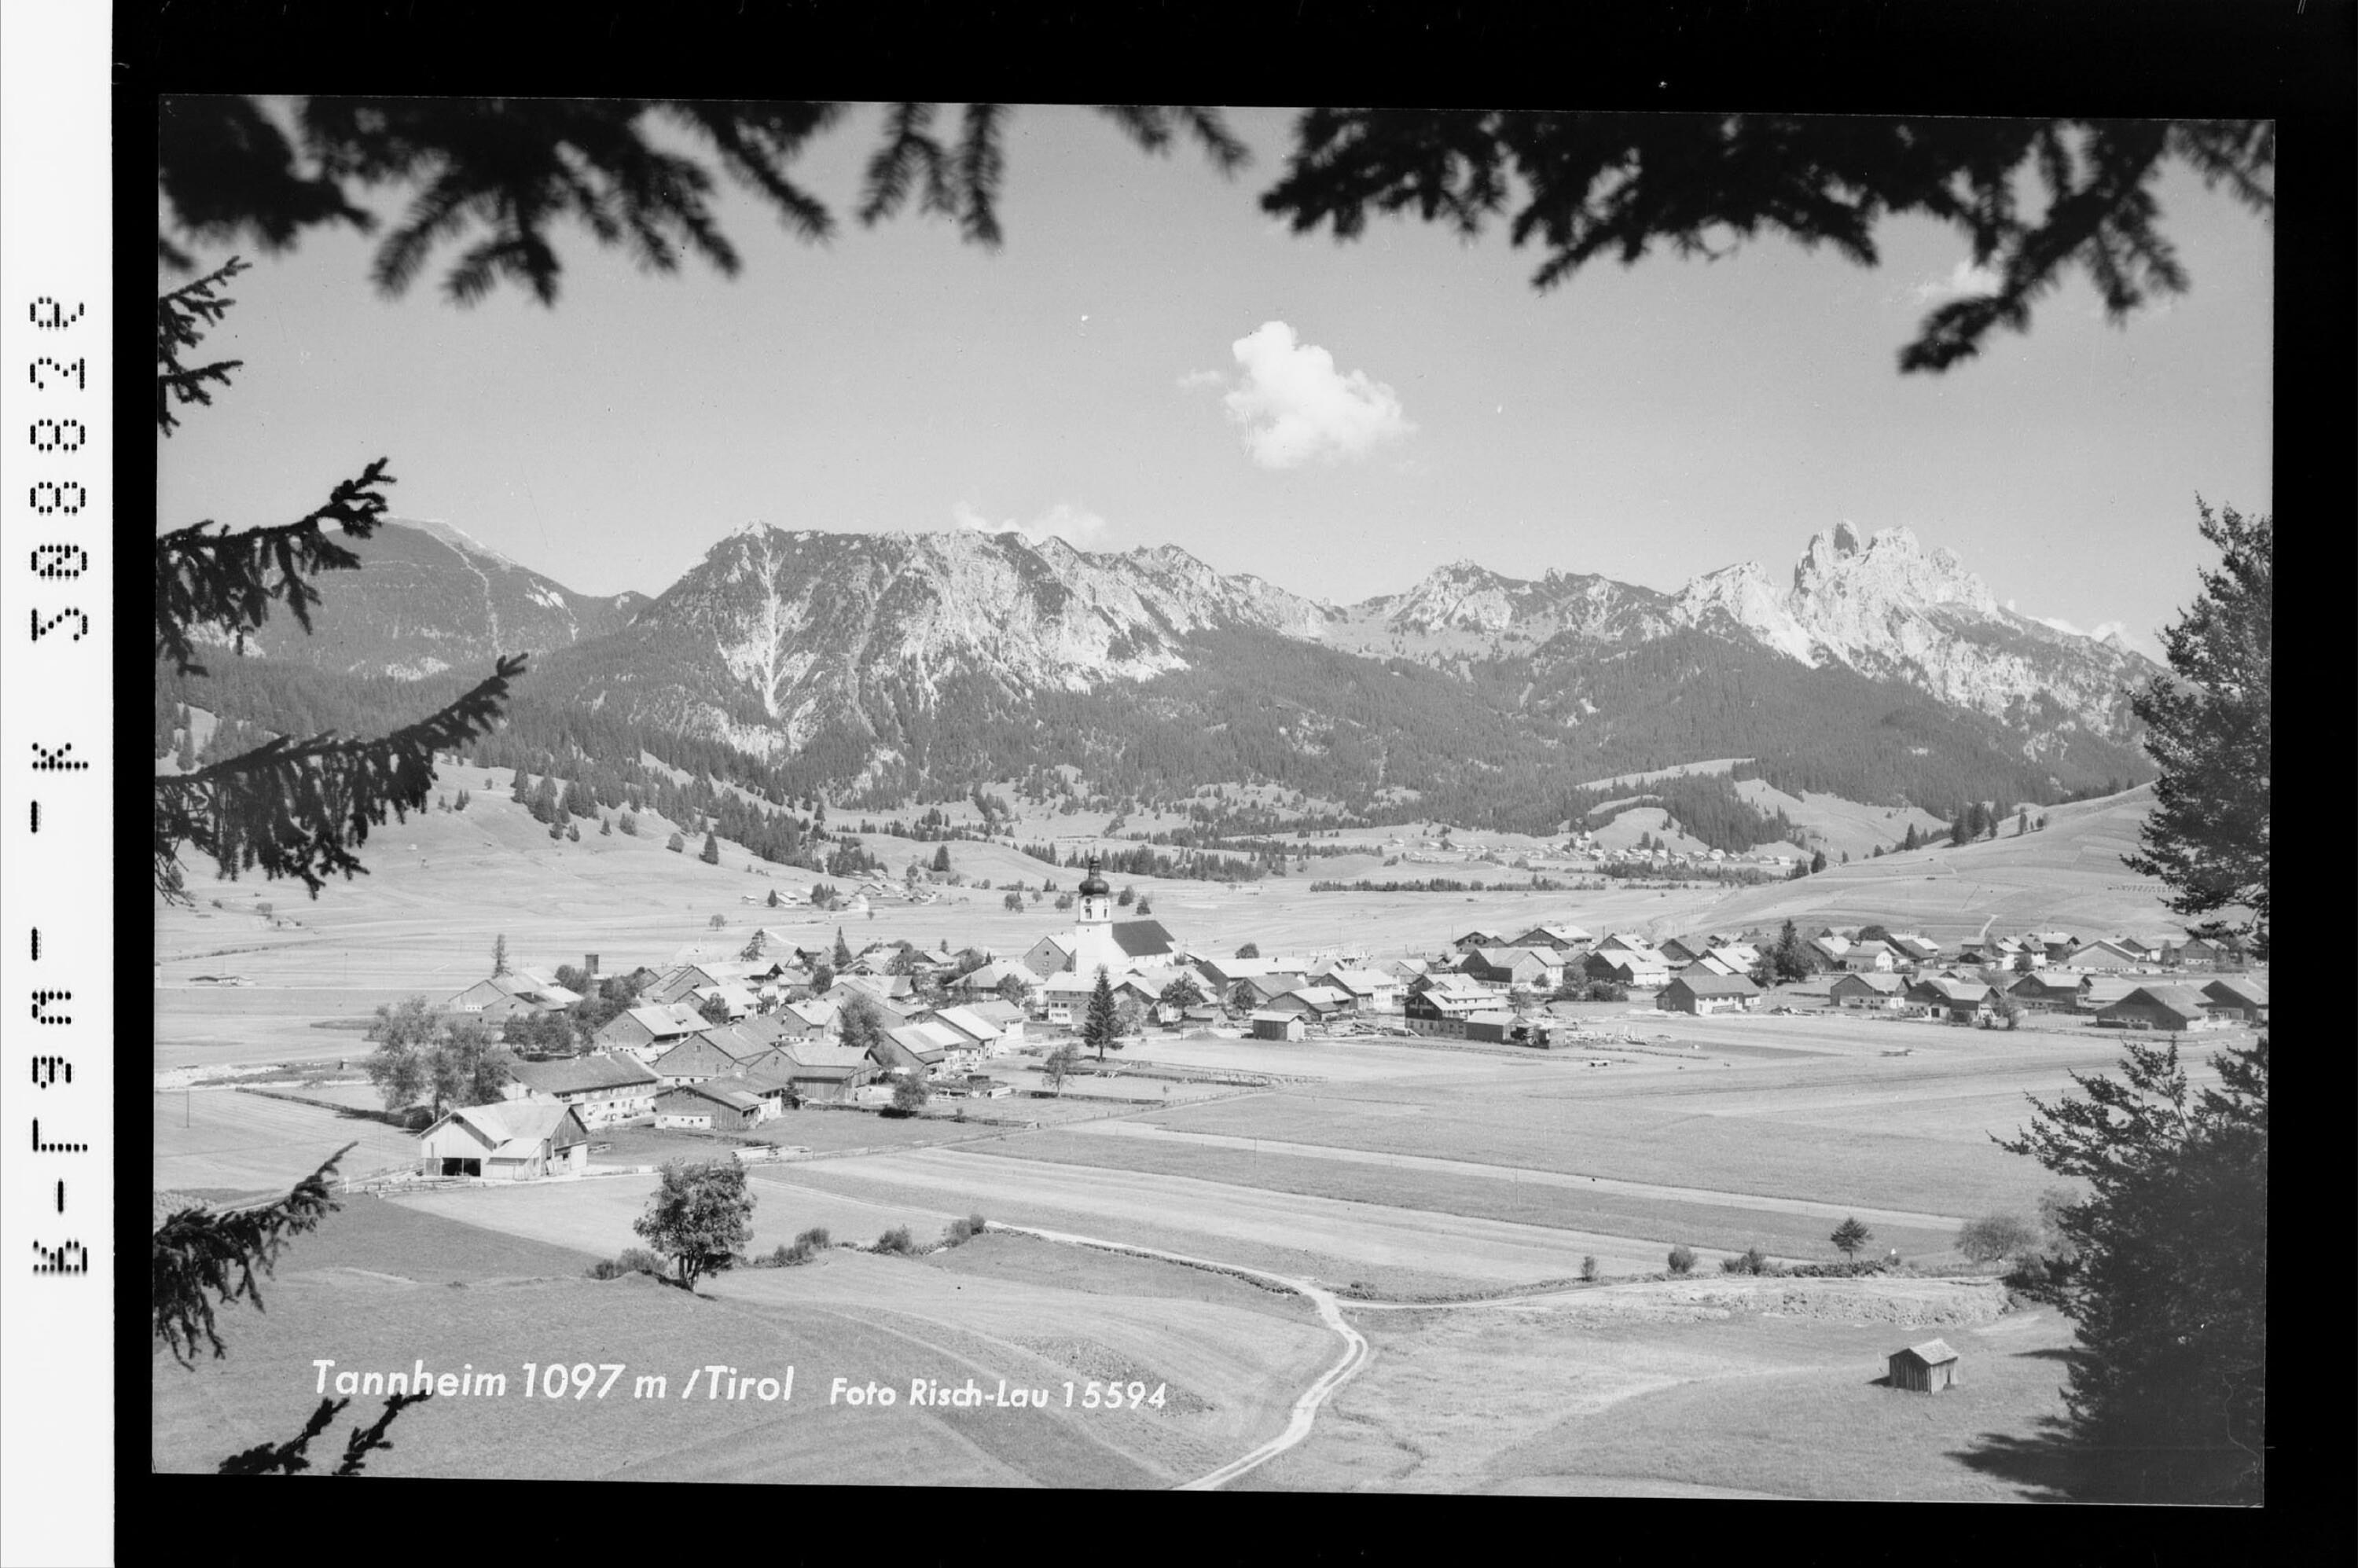 Tannheim 1097 m, Tirol></div>


    <hr>
    <div class=